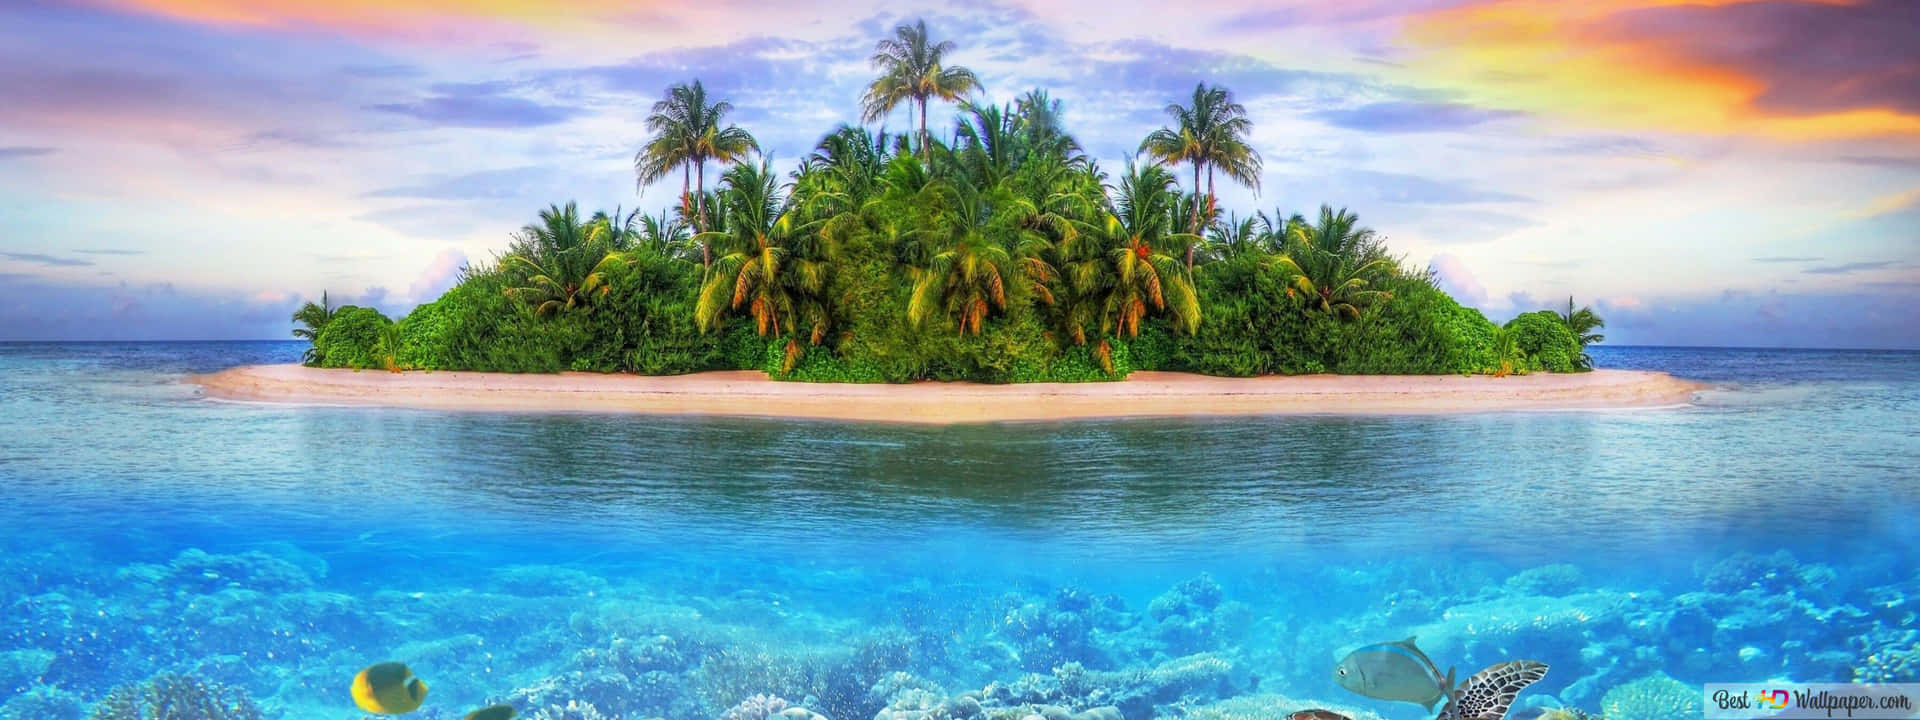 Et ø med palmer og koraller i havet Wallpaper